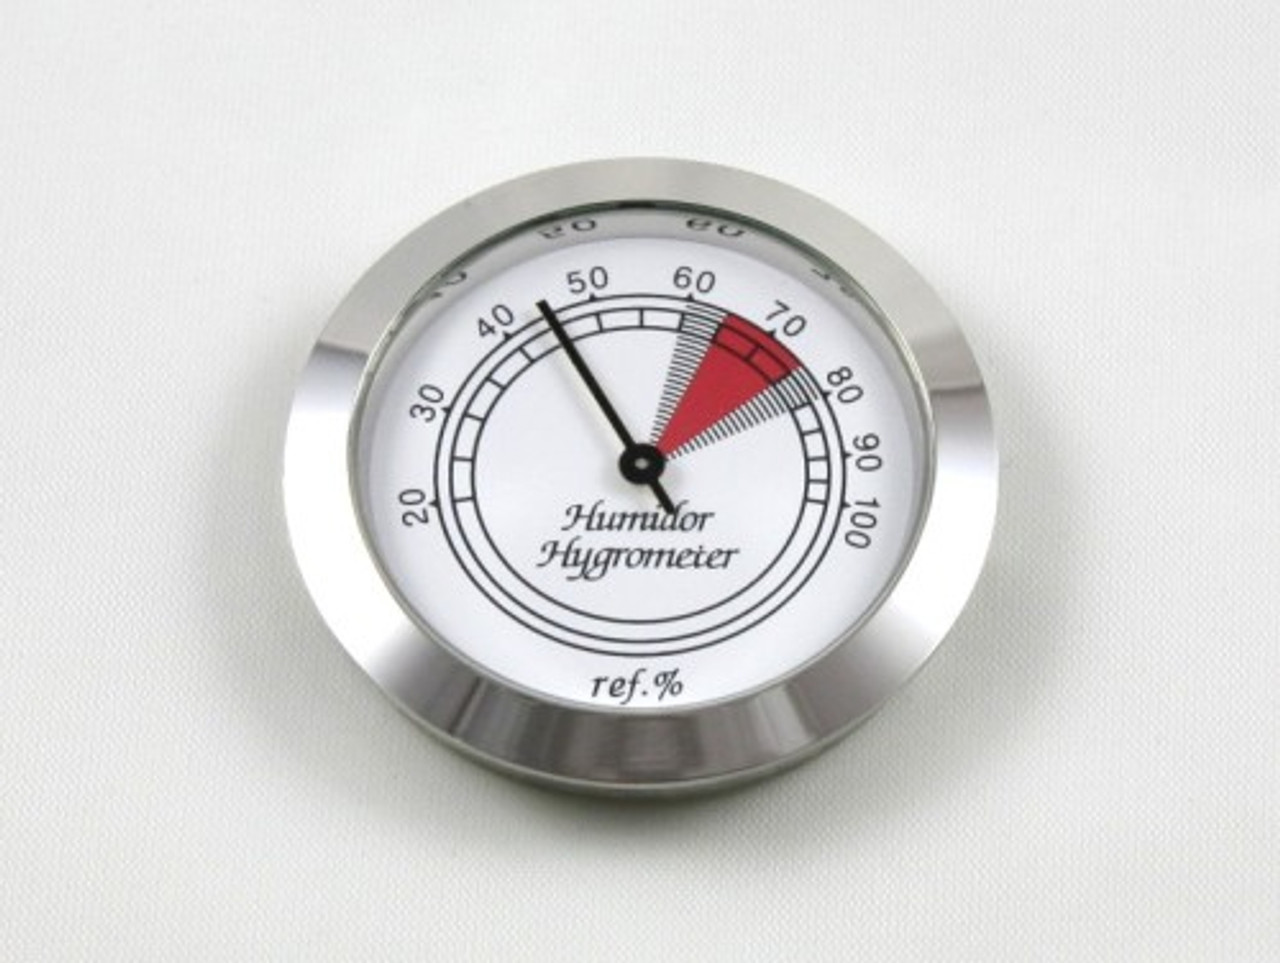 Brighton Analog Cigar Hygrometer with Thermometer